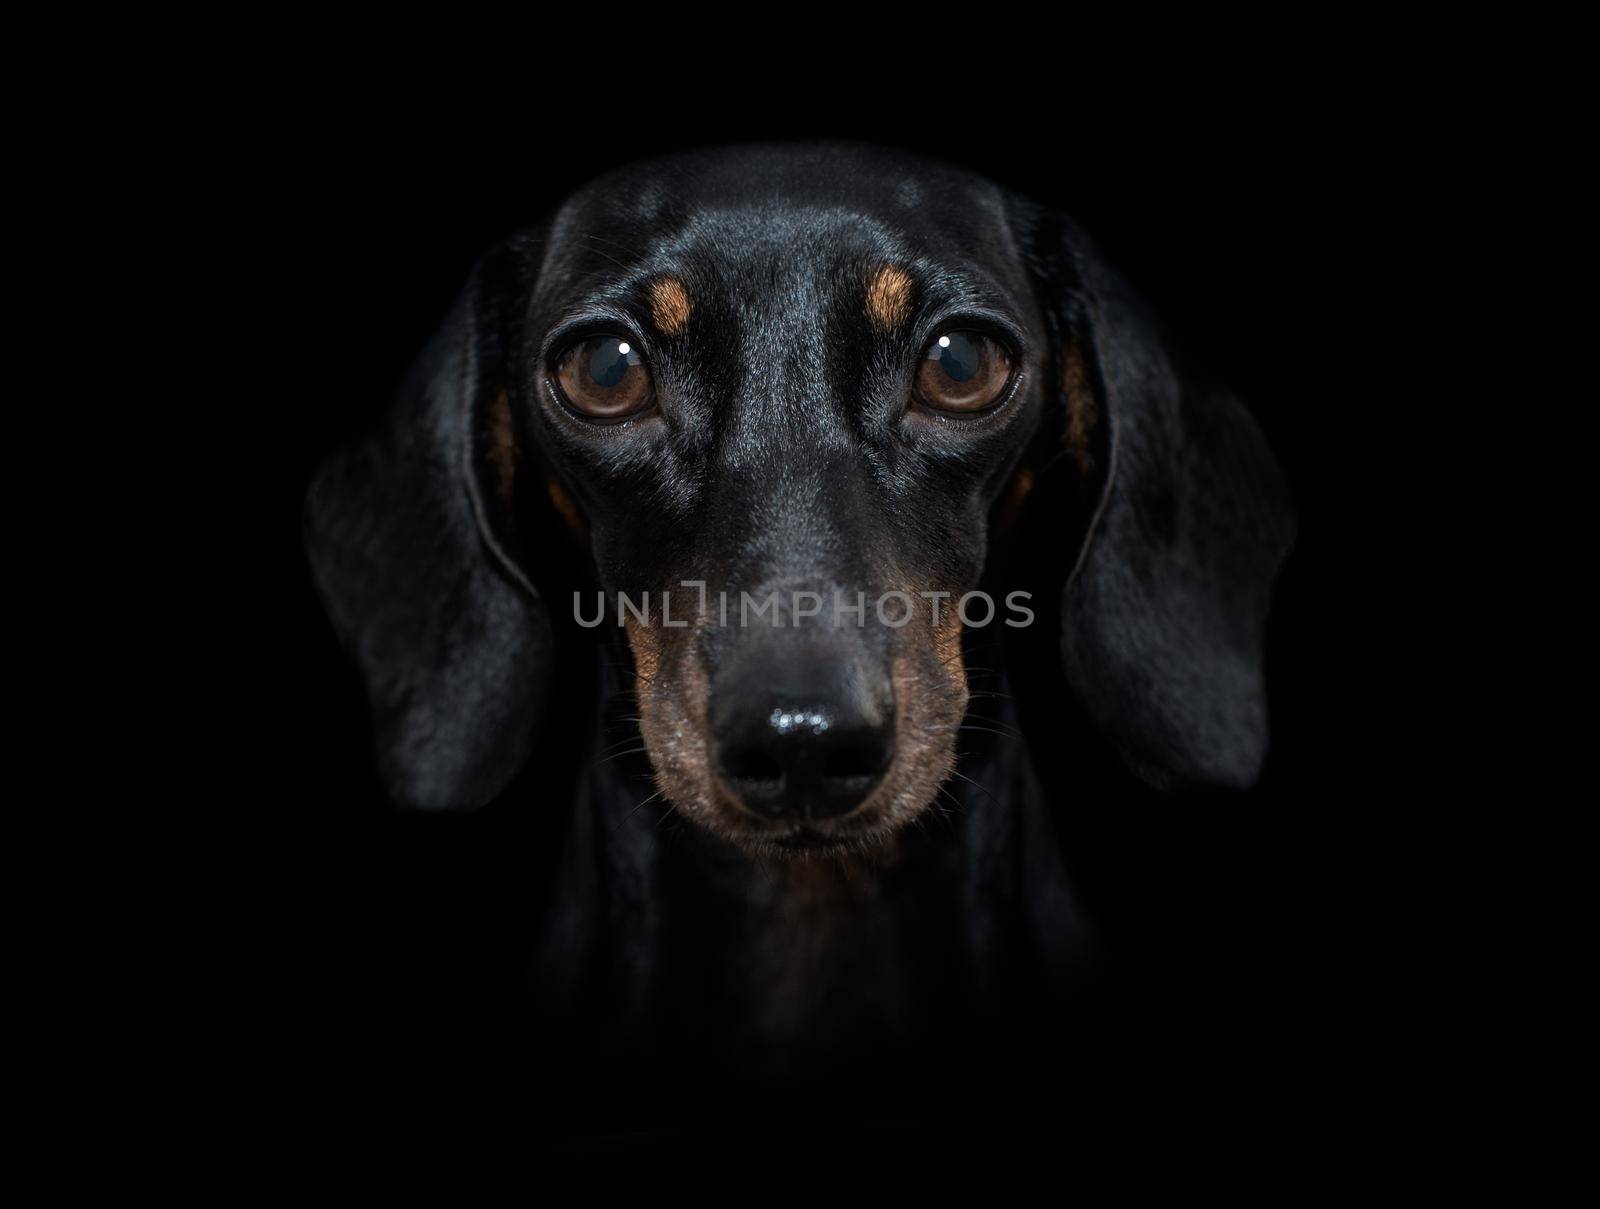 dog isolated on black dramtic dark background by Brosch